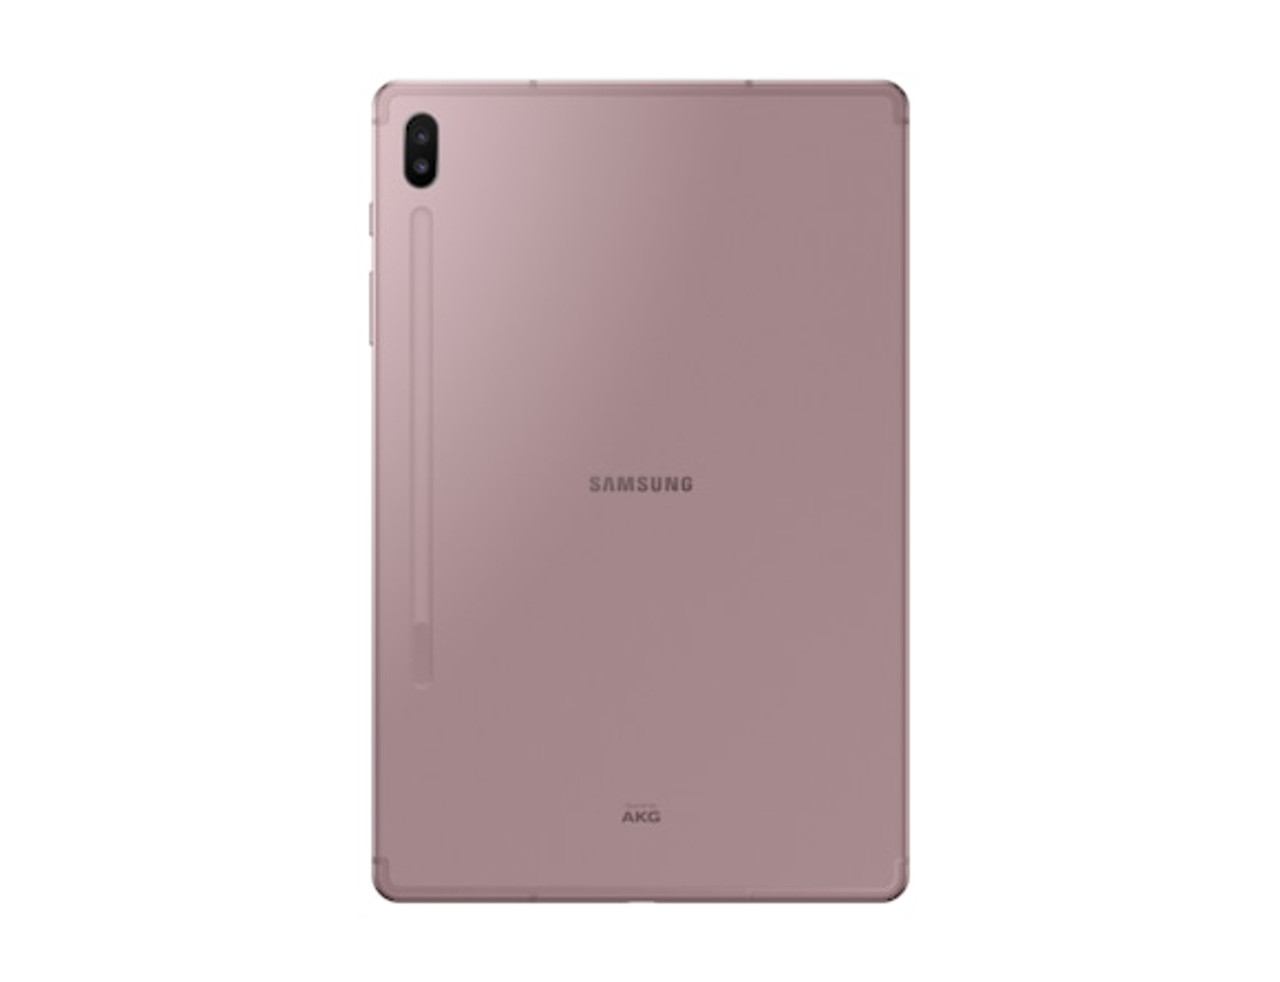 Планшеты памятью 128 гб. Samsung Tab s6 10.5. Планшет самсунг s6 128gb LTE. Планшет Samsung Galaxy Tab s6 со стилусом 128 ГБ. Планшет Samsung Galaxy Tab a7 128gb.